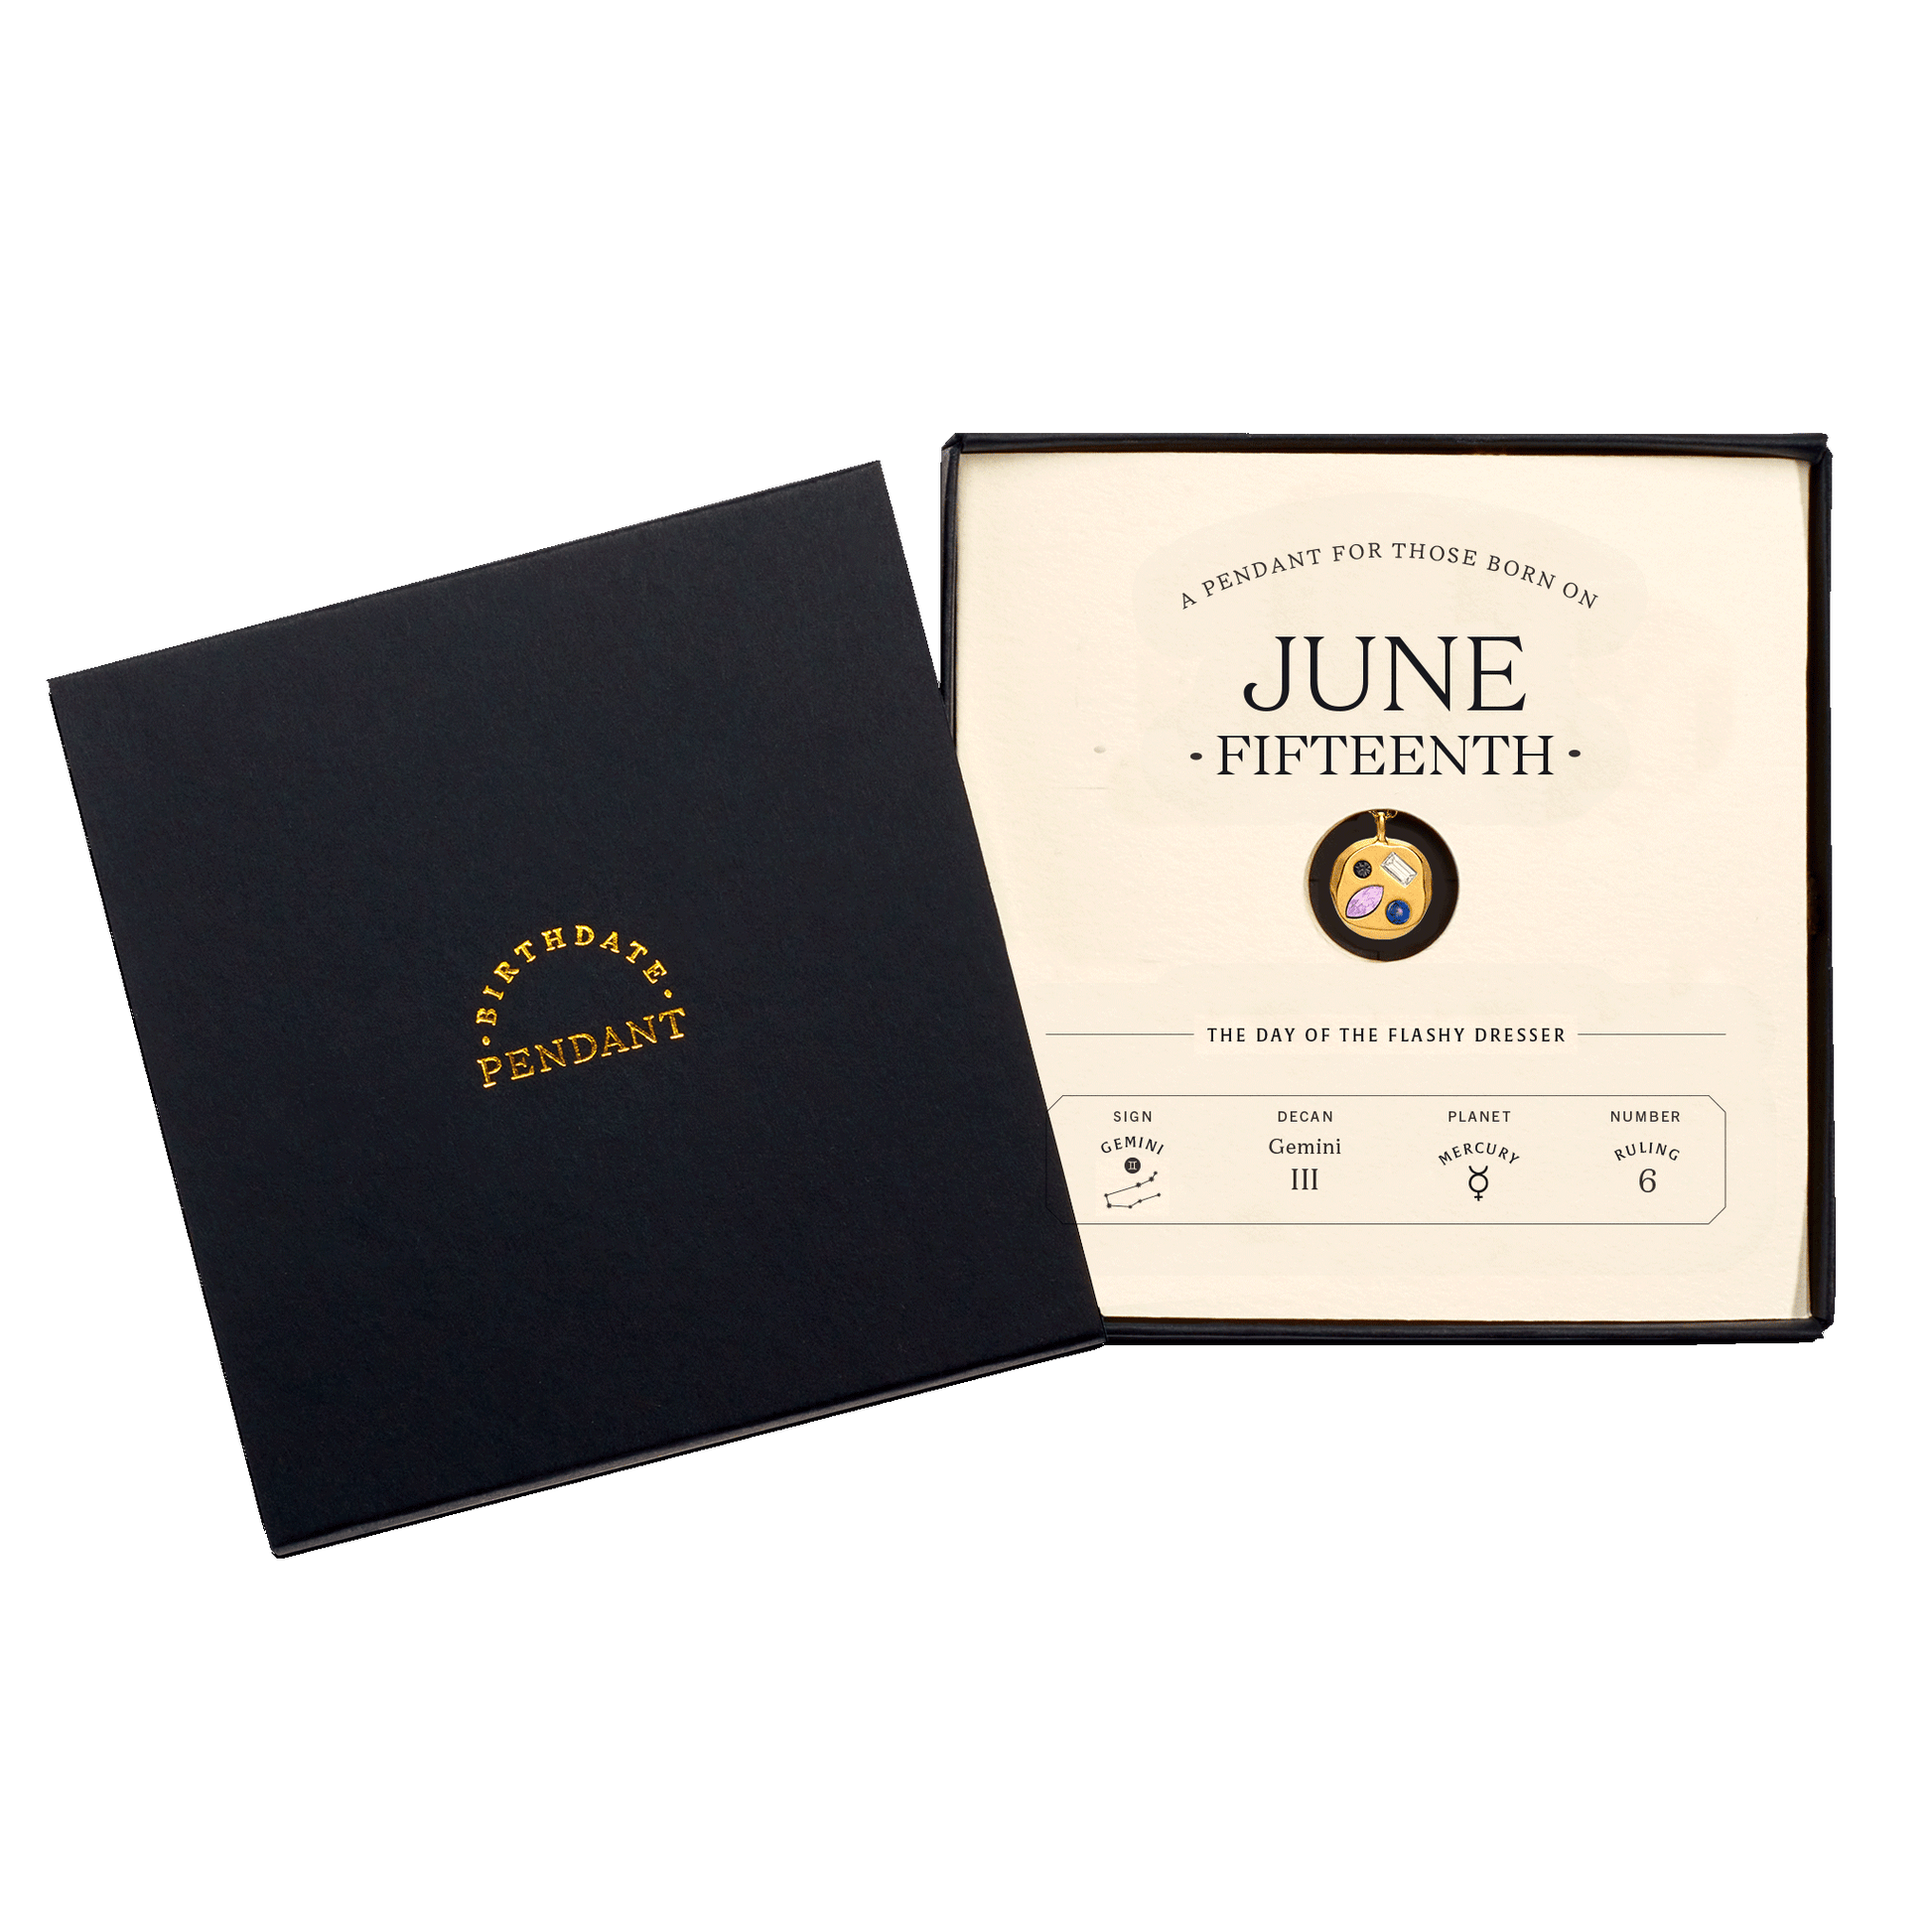 The June Fifteenth Pendant inside its box